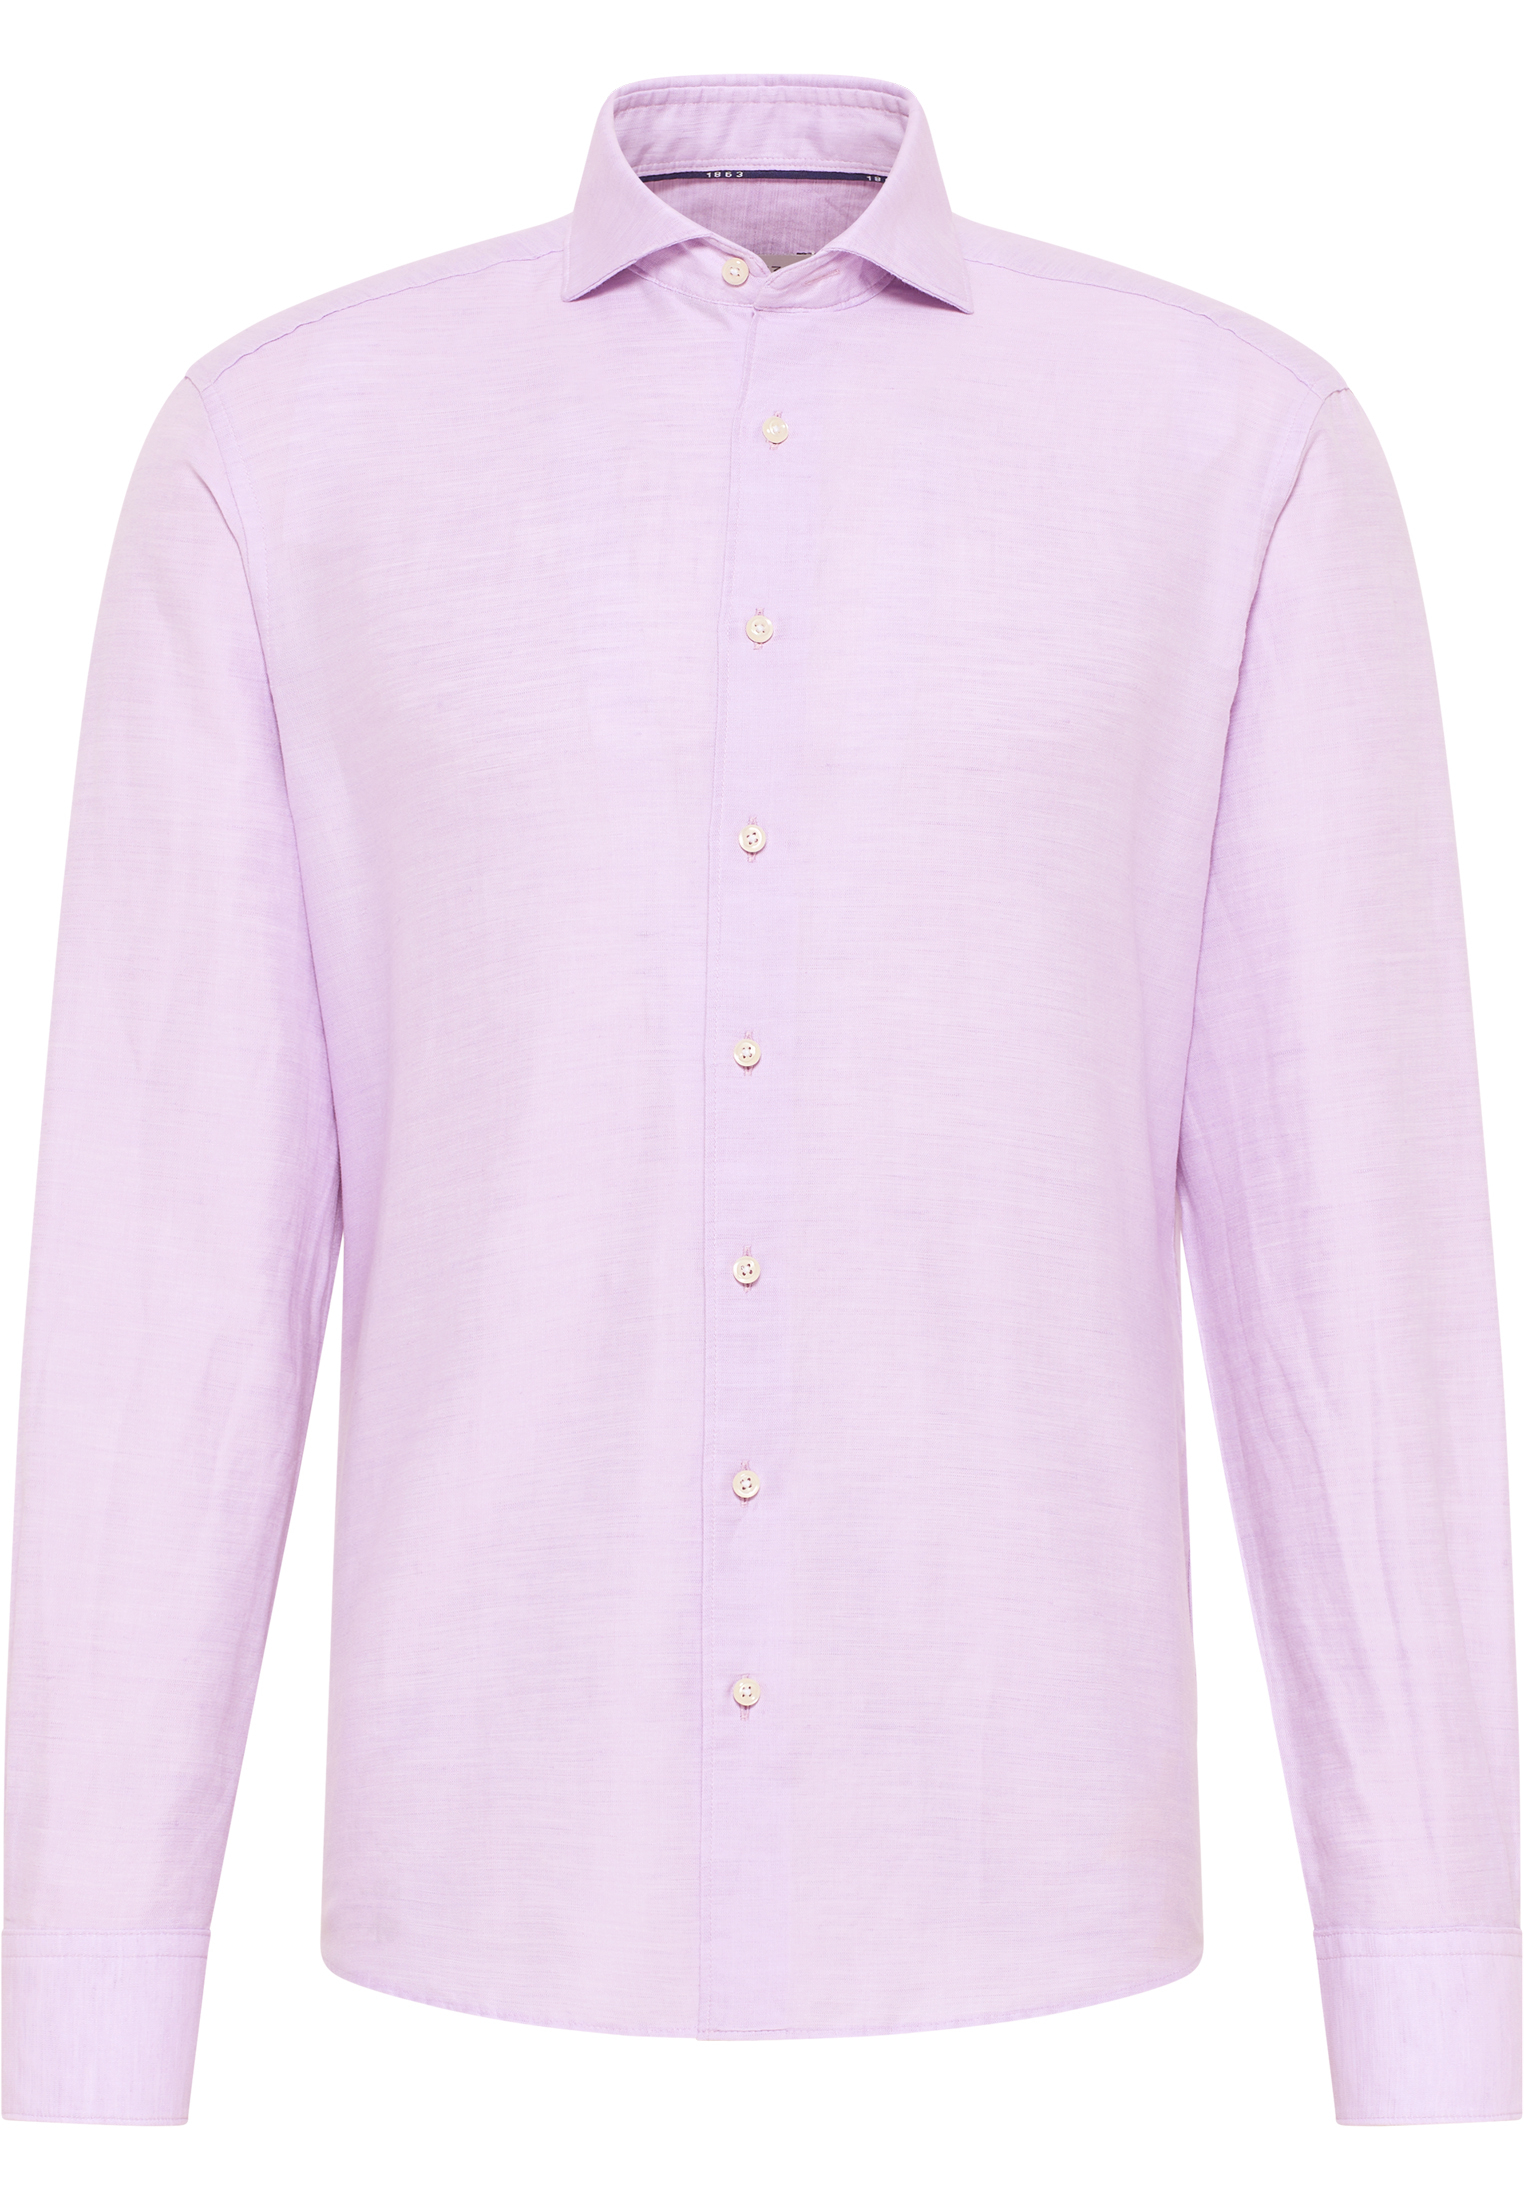 MODERN FIT Linen Shirt in lavender plain